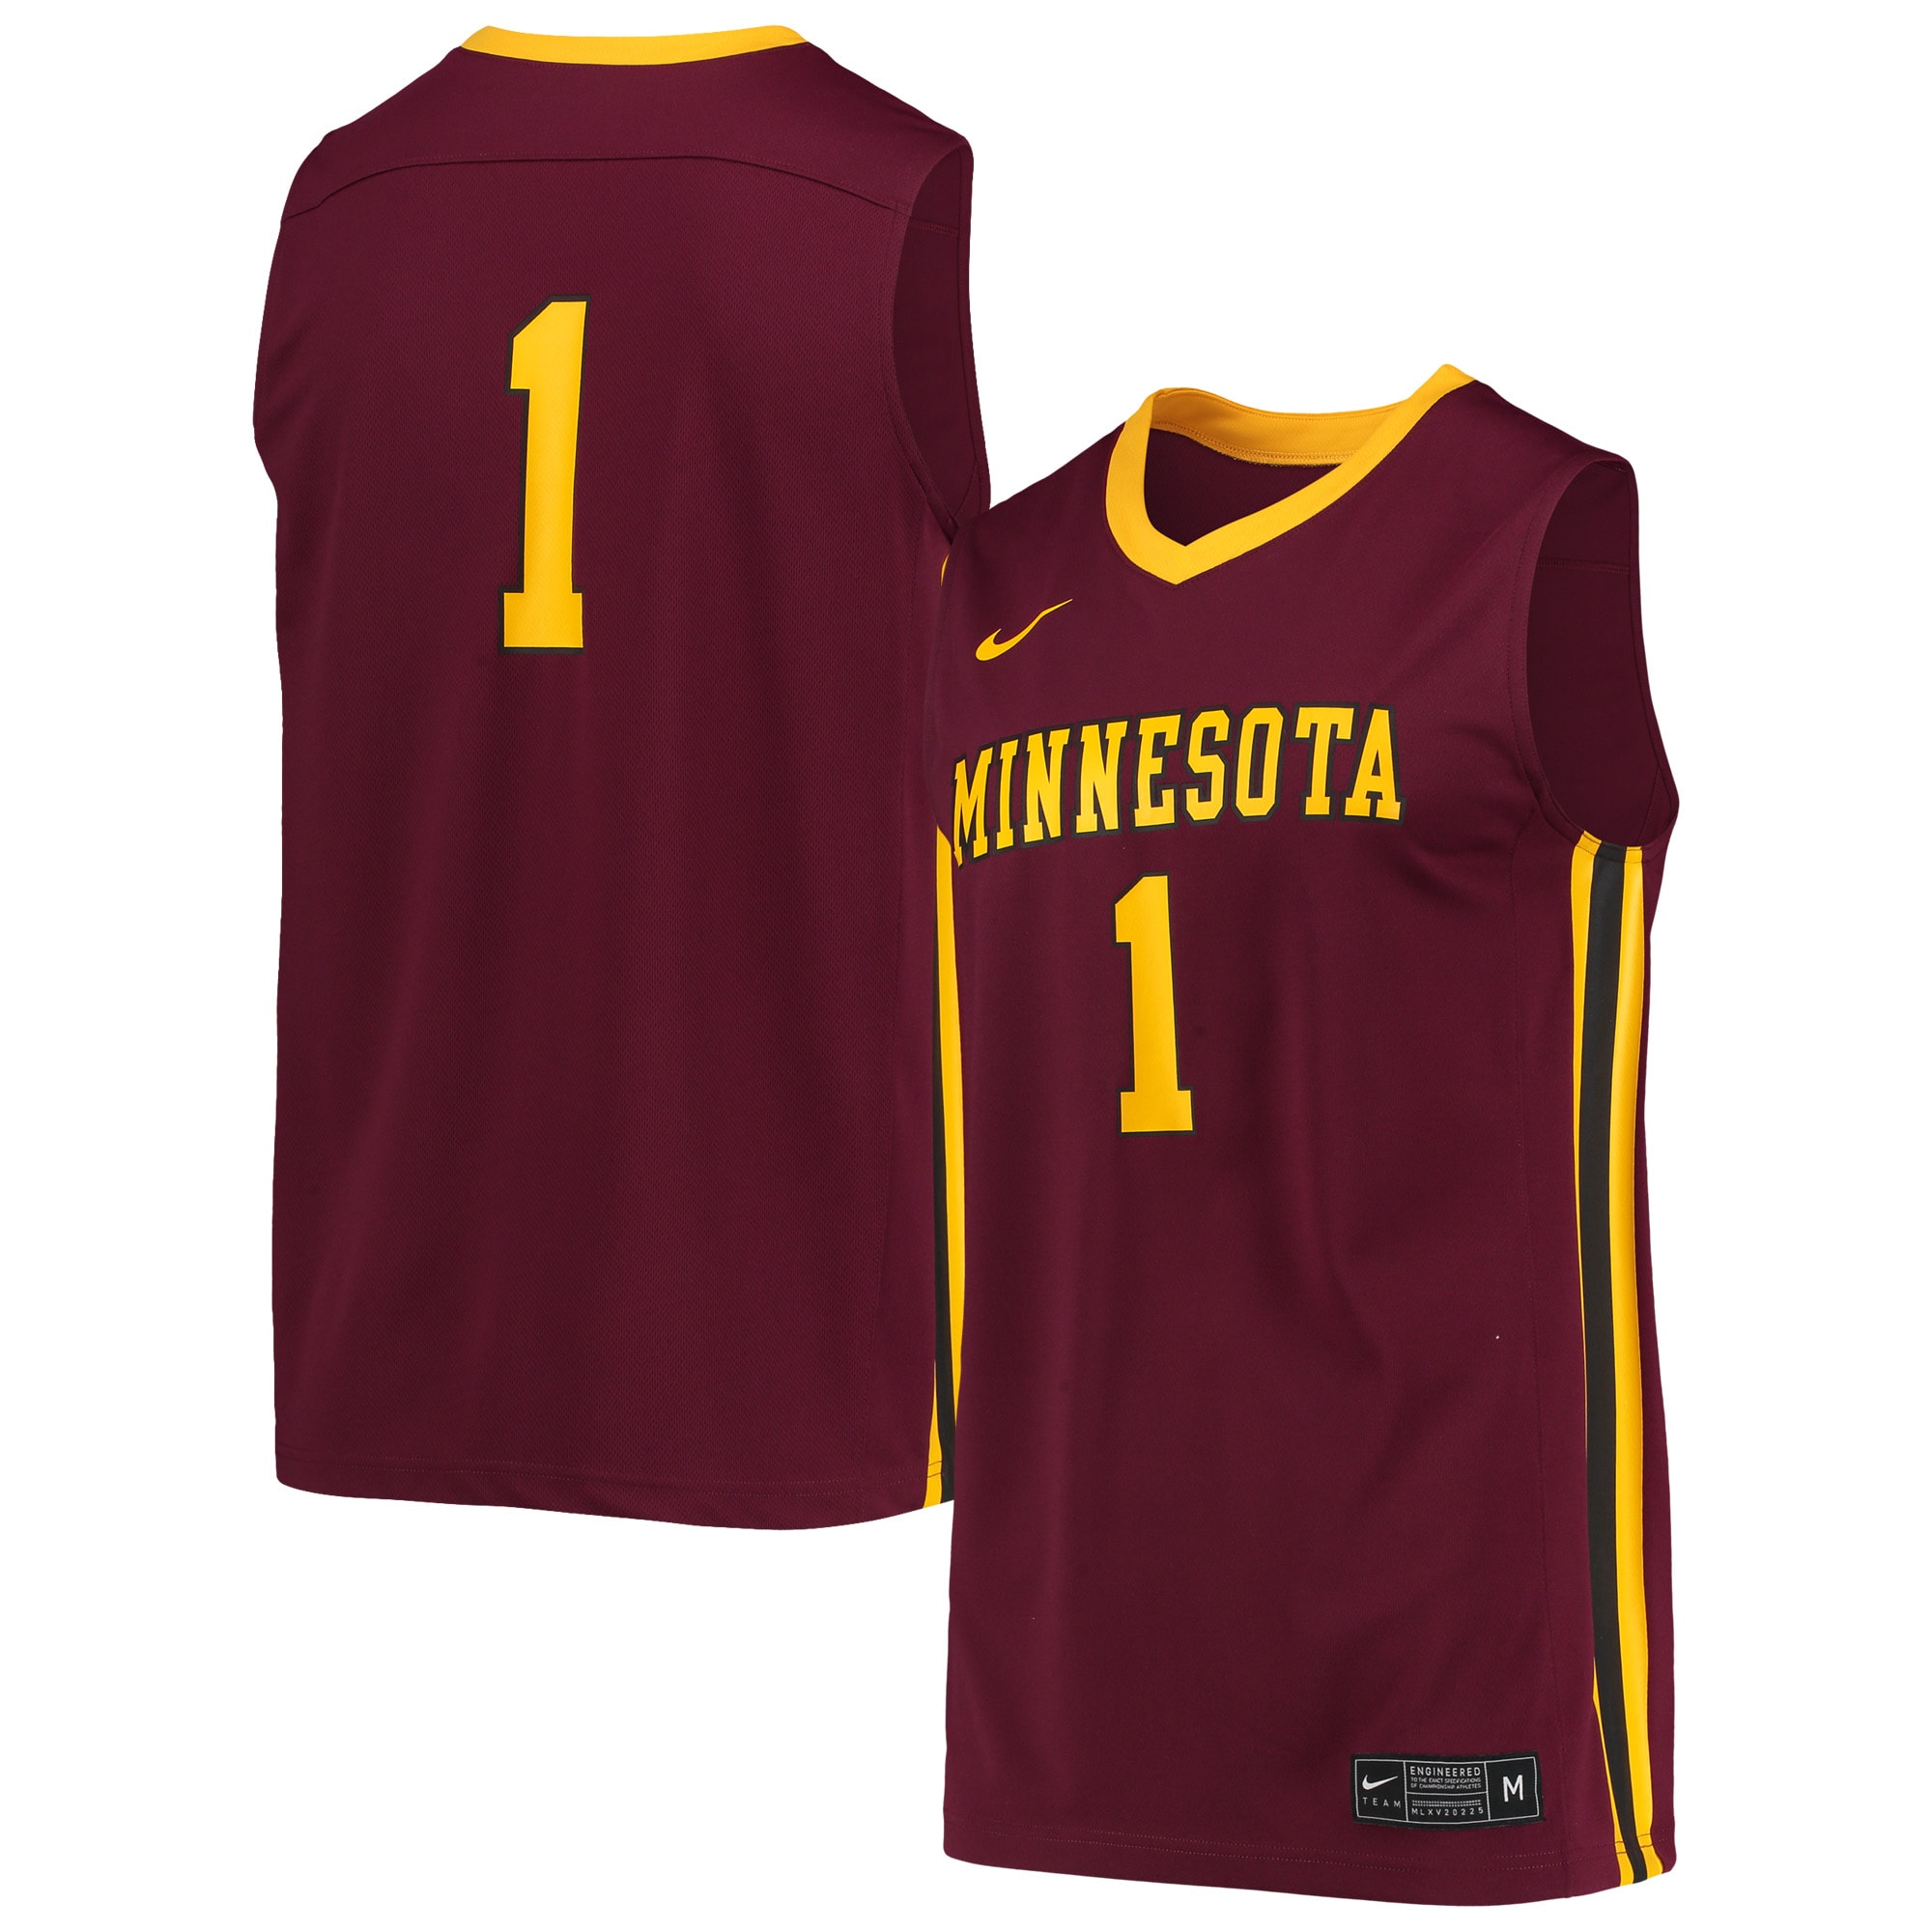 #1 Minnesota Golden Gophers Replica Basketball Jersey - Maroon For Youth Women Men